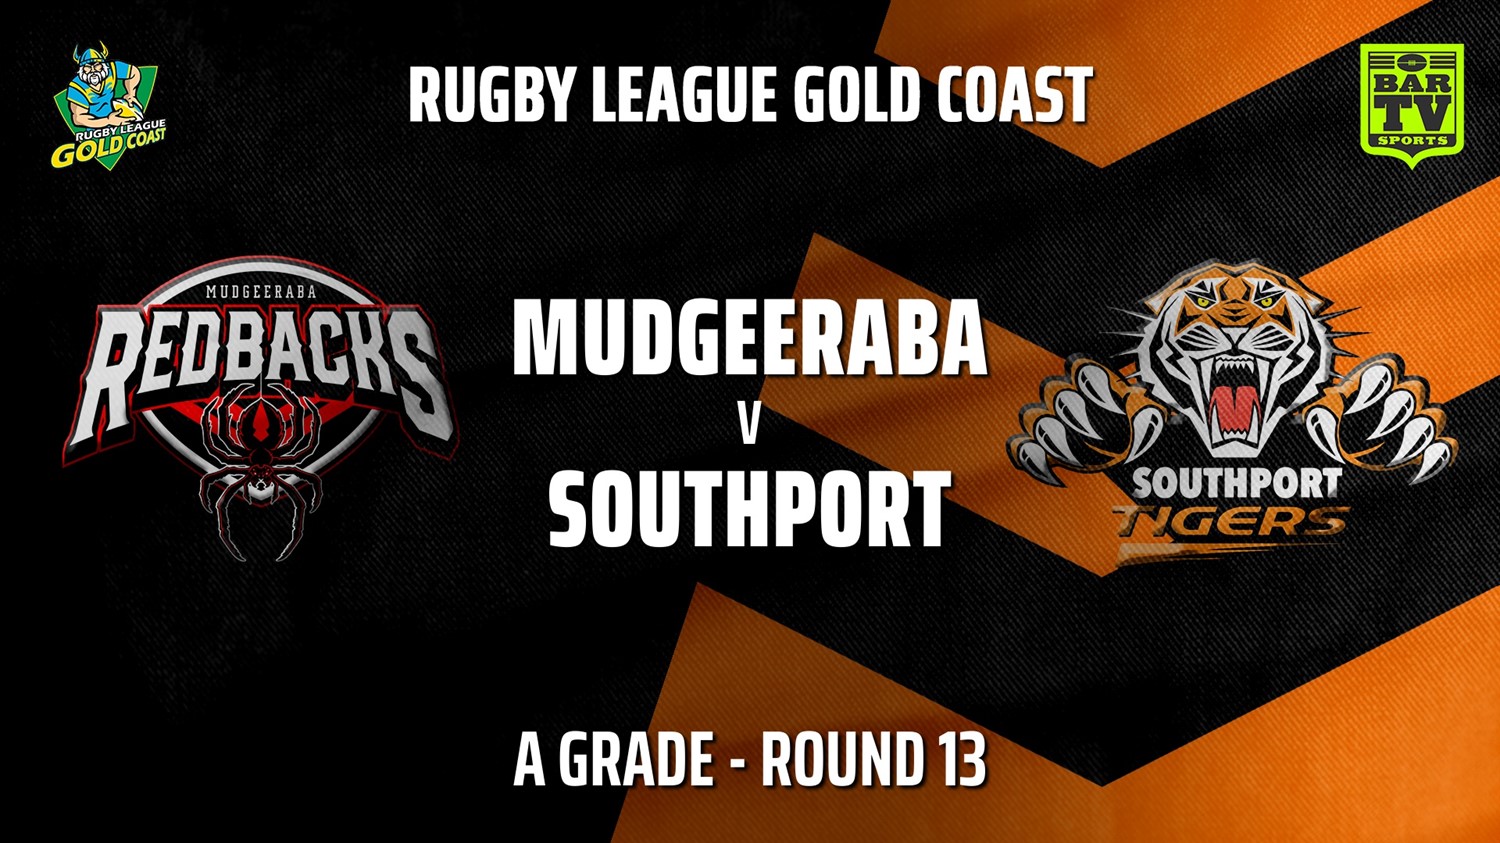 210912-Gold Coast Round 13 - A Grade - Mudgeeraba Redbacks v Southport Tigers Minigame Slate Image